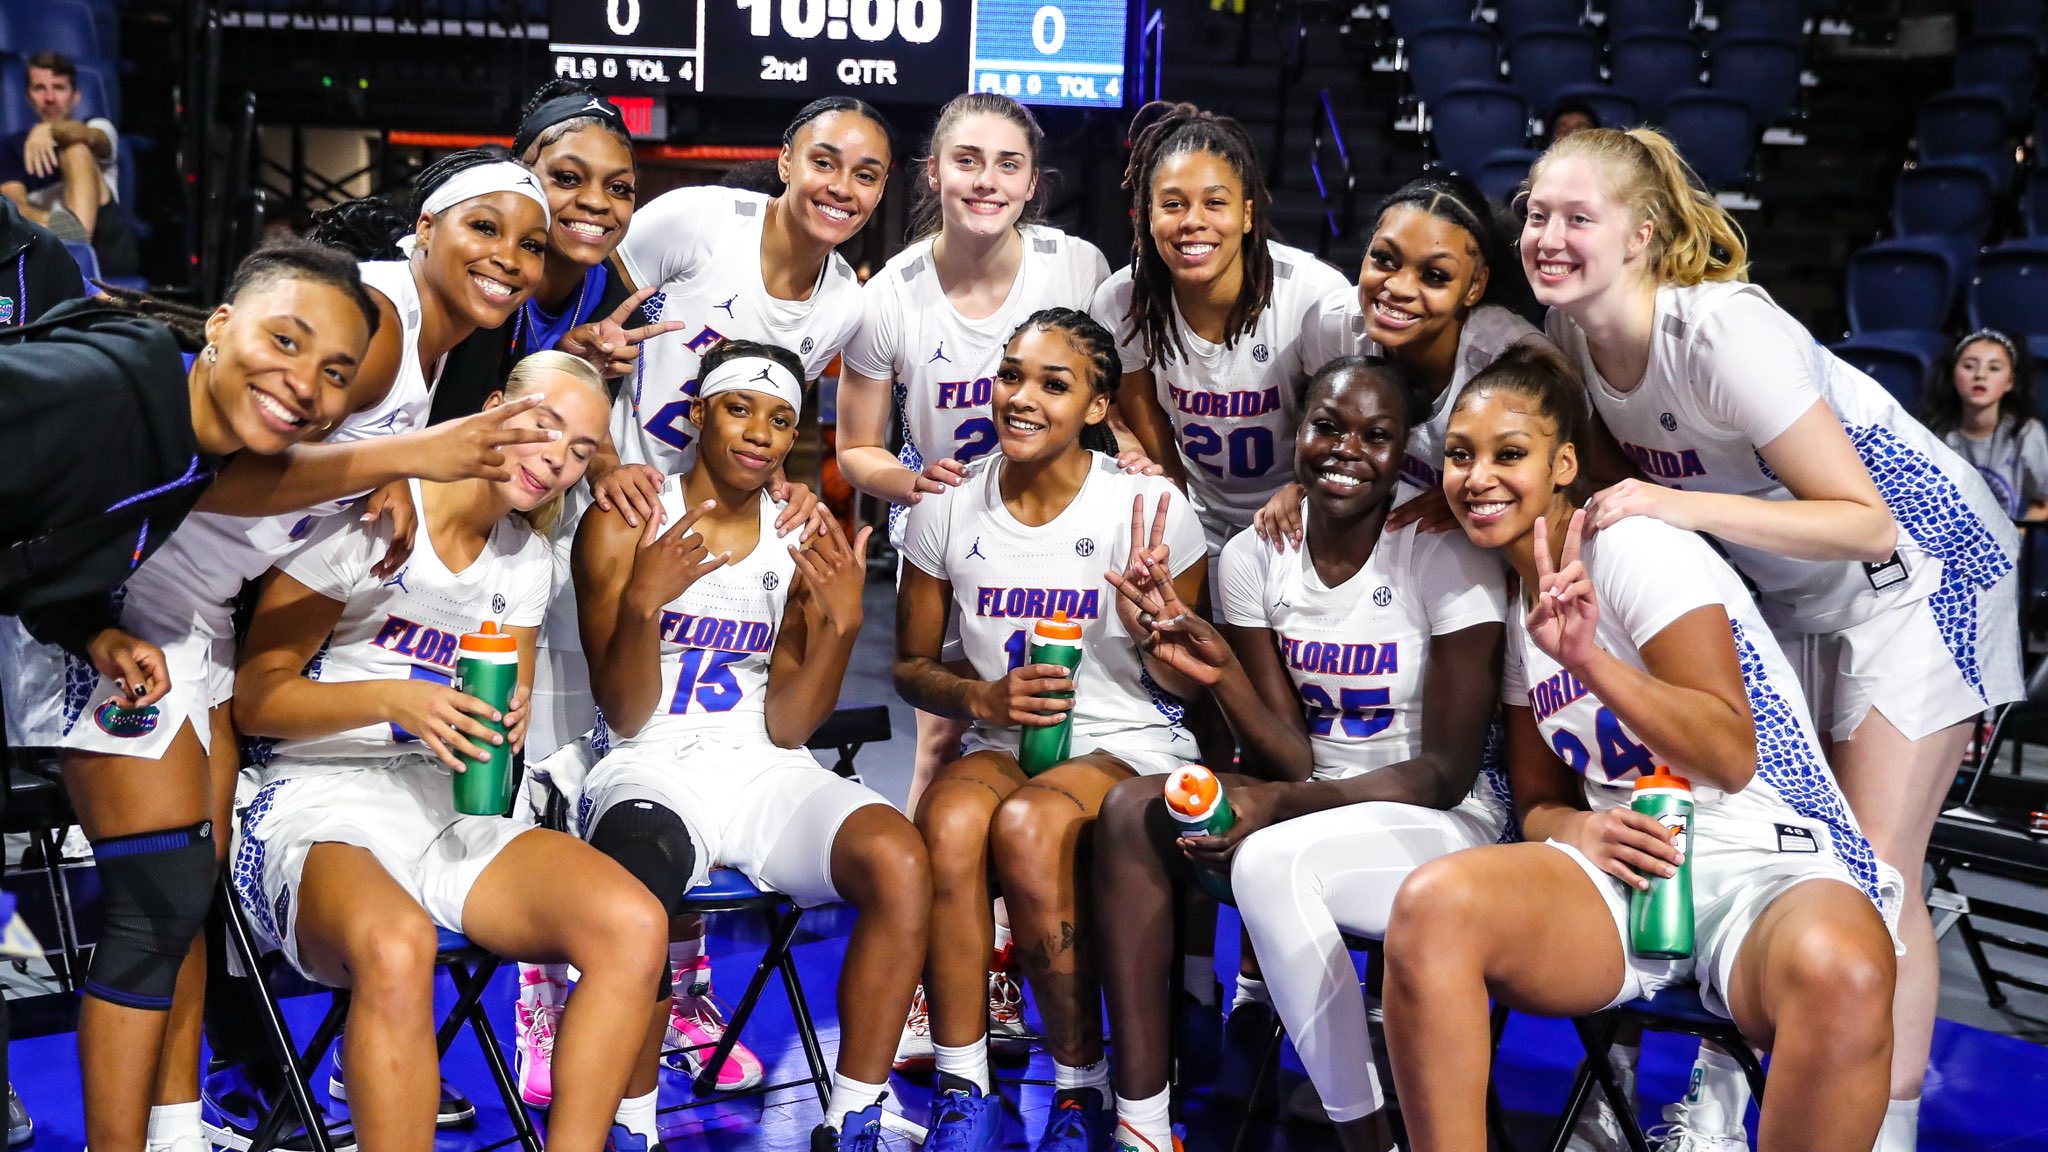 Despite falling to FSU, Florida women’s basketball has a path forward